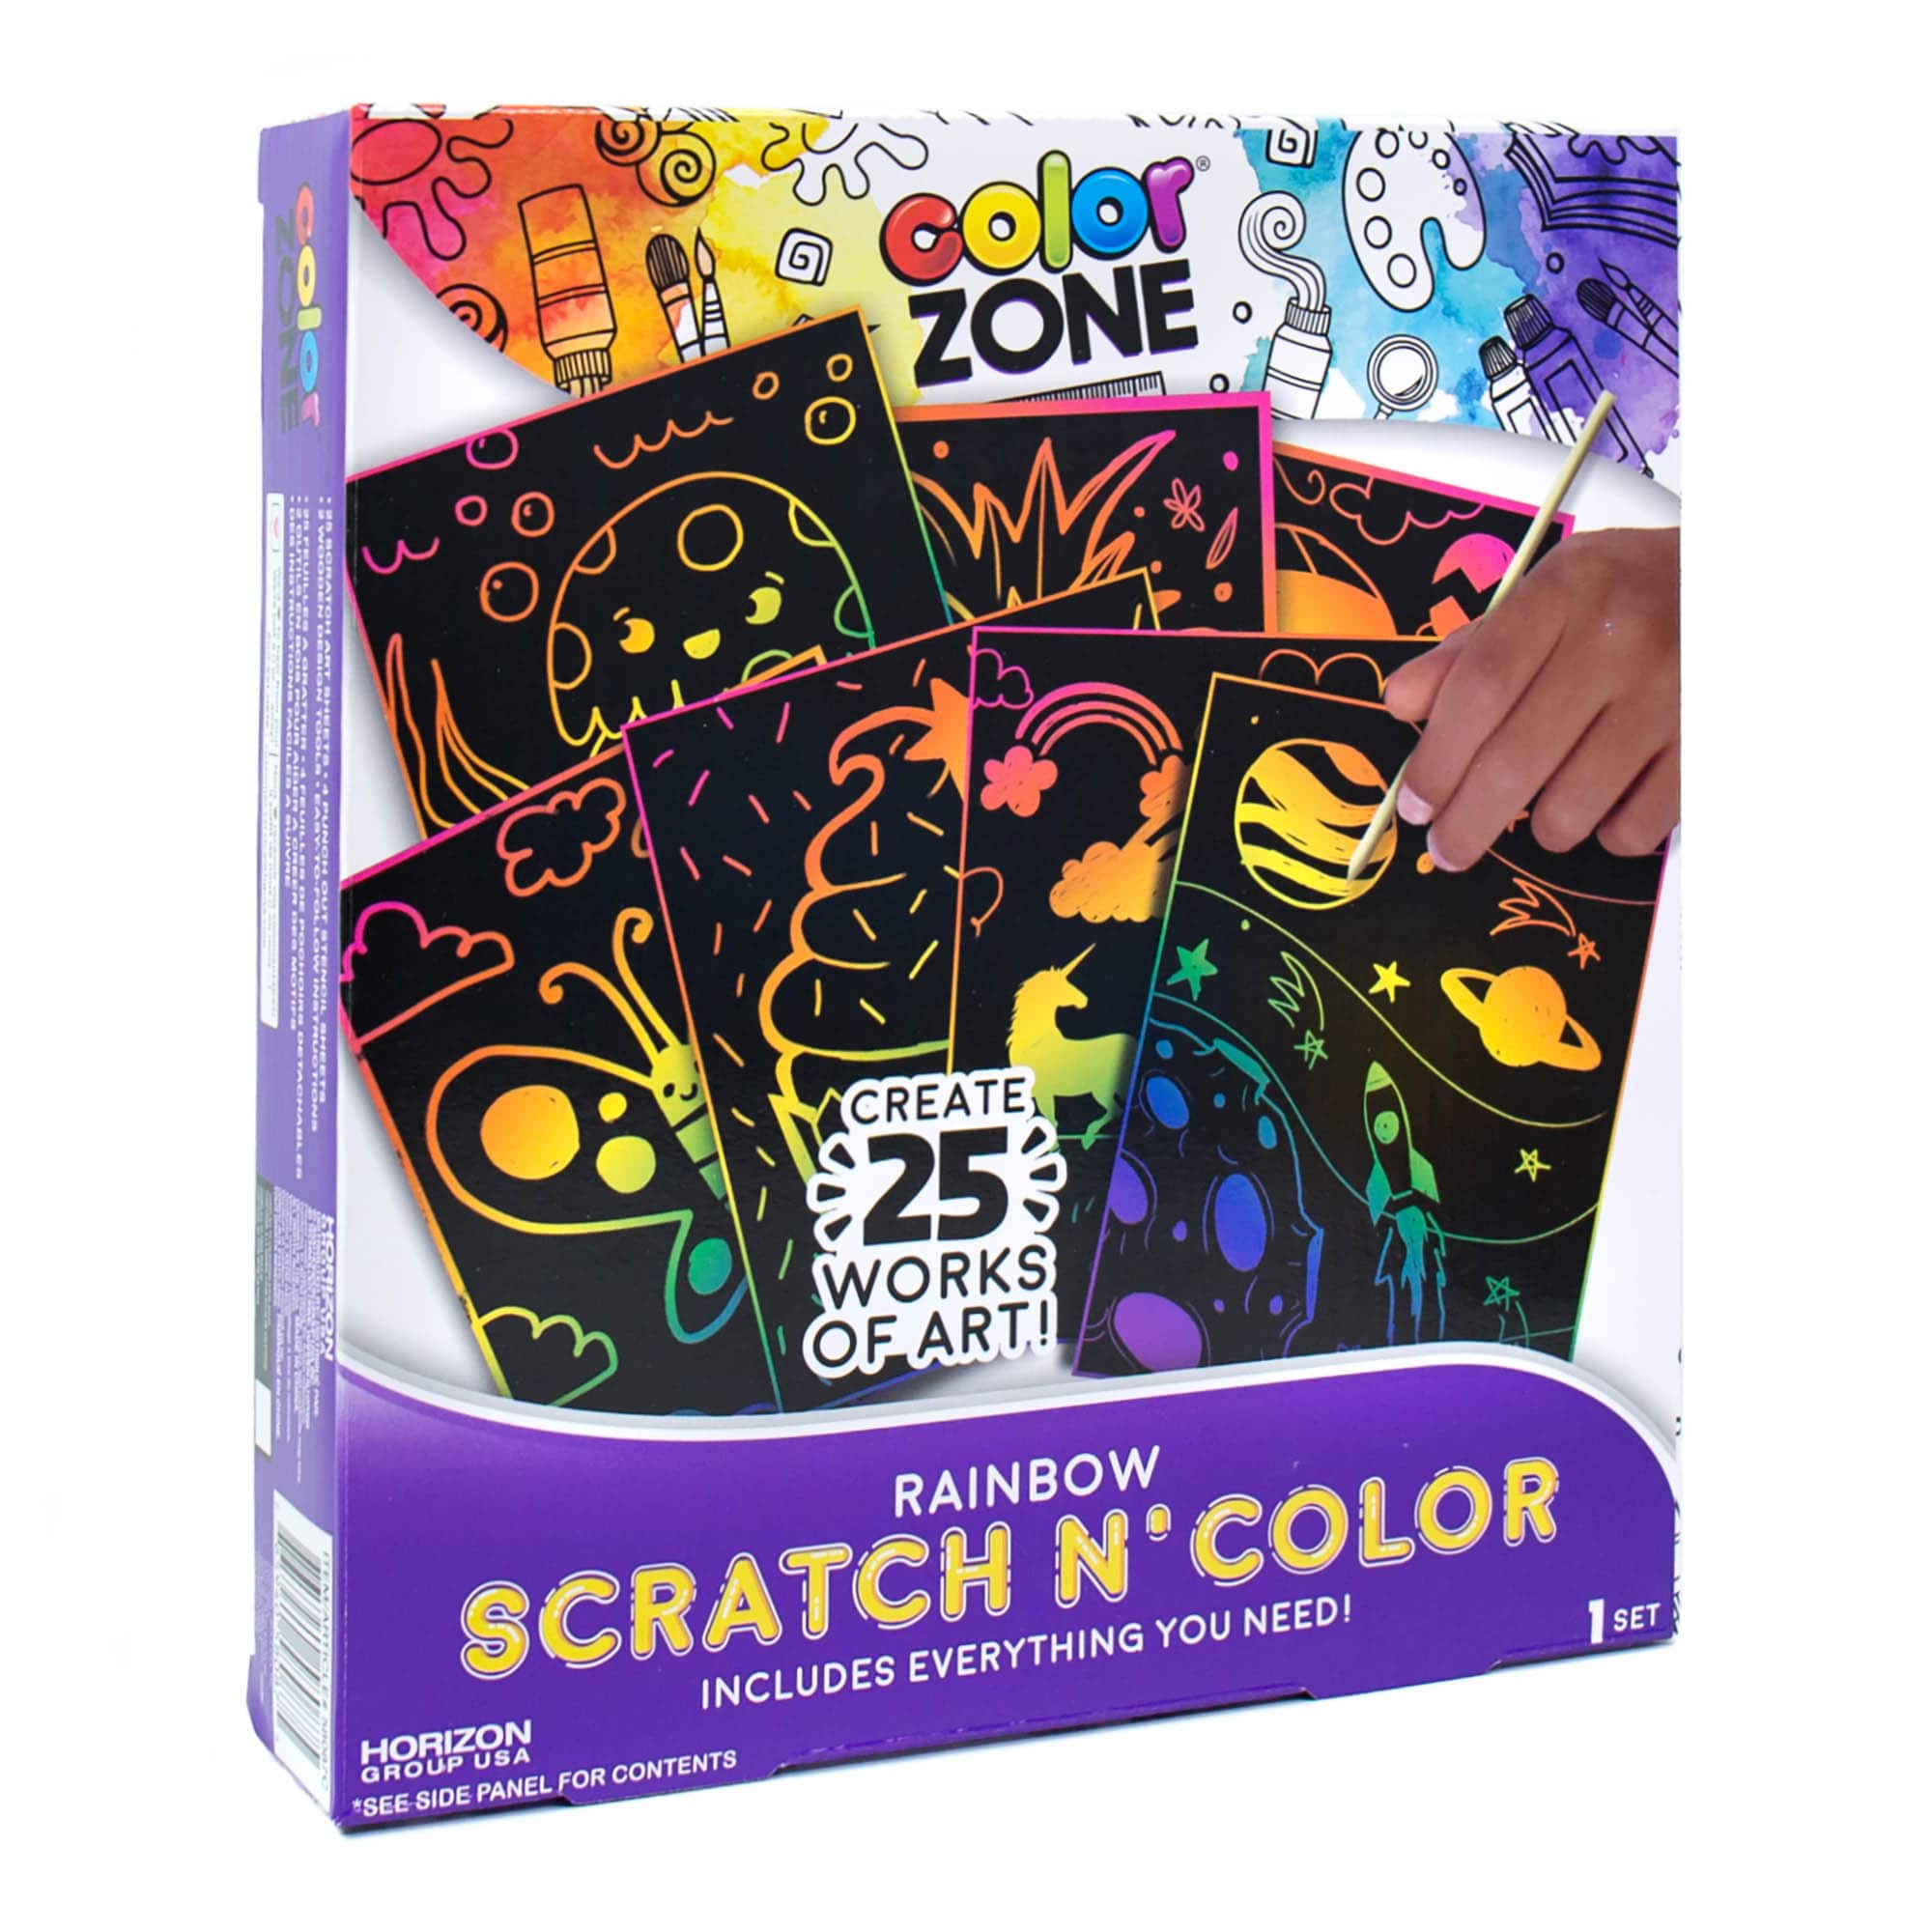 Color Zone® Rainbow Scratch N' Color, color blocks band scratch